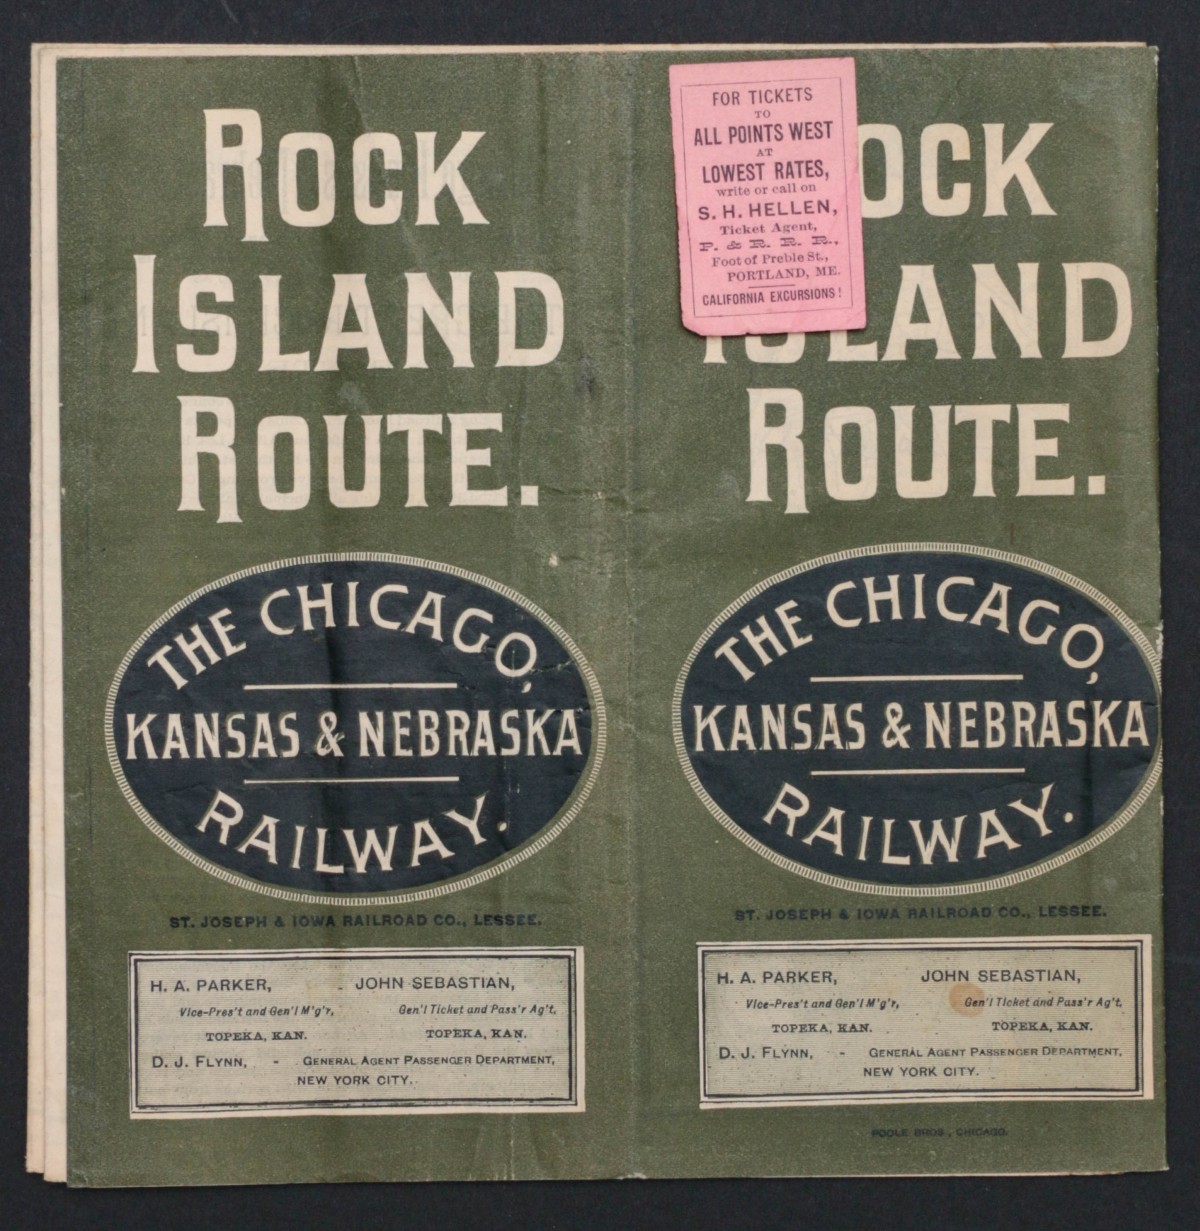 THE CHICAGO, KANS., & NEBR., RY. TIMETABLE FOR 1888